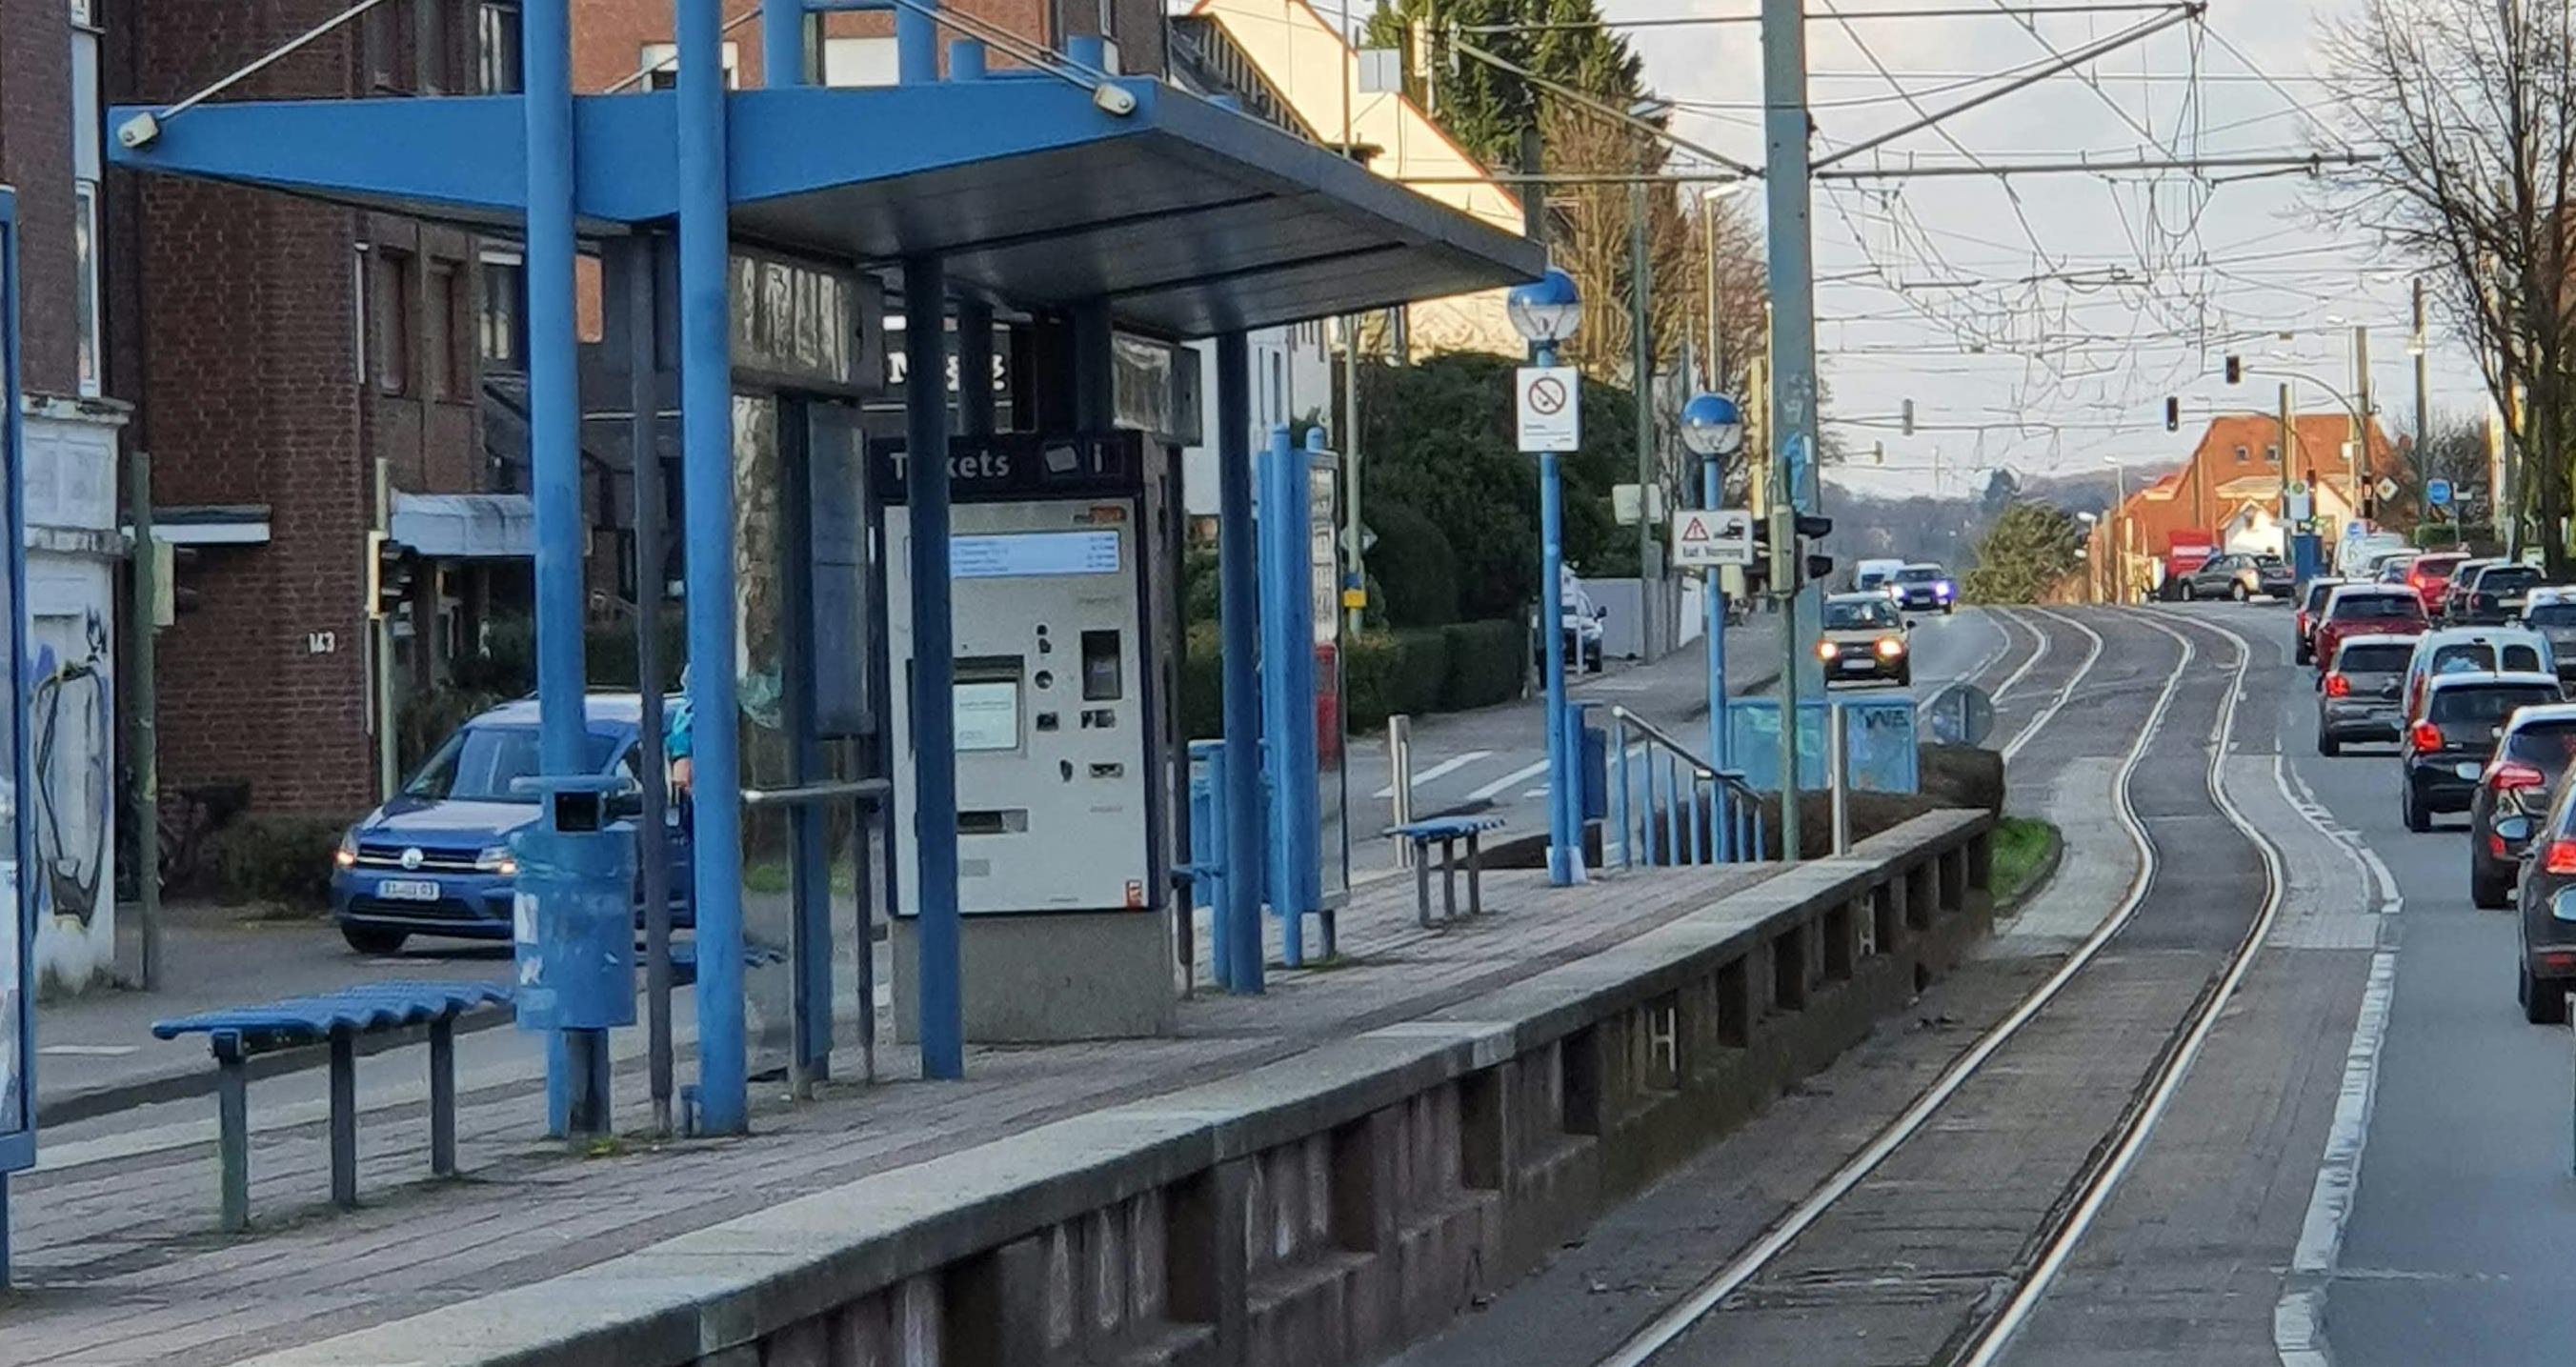 Umbau einer Haltestelle Stadtbahn Linie 3 Bielefeld